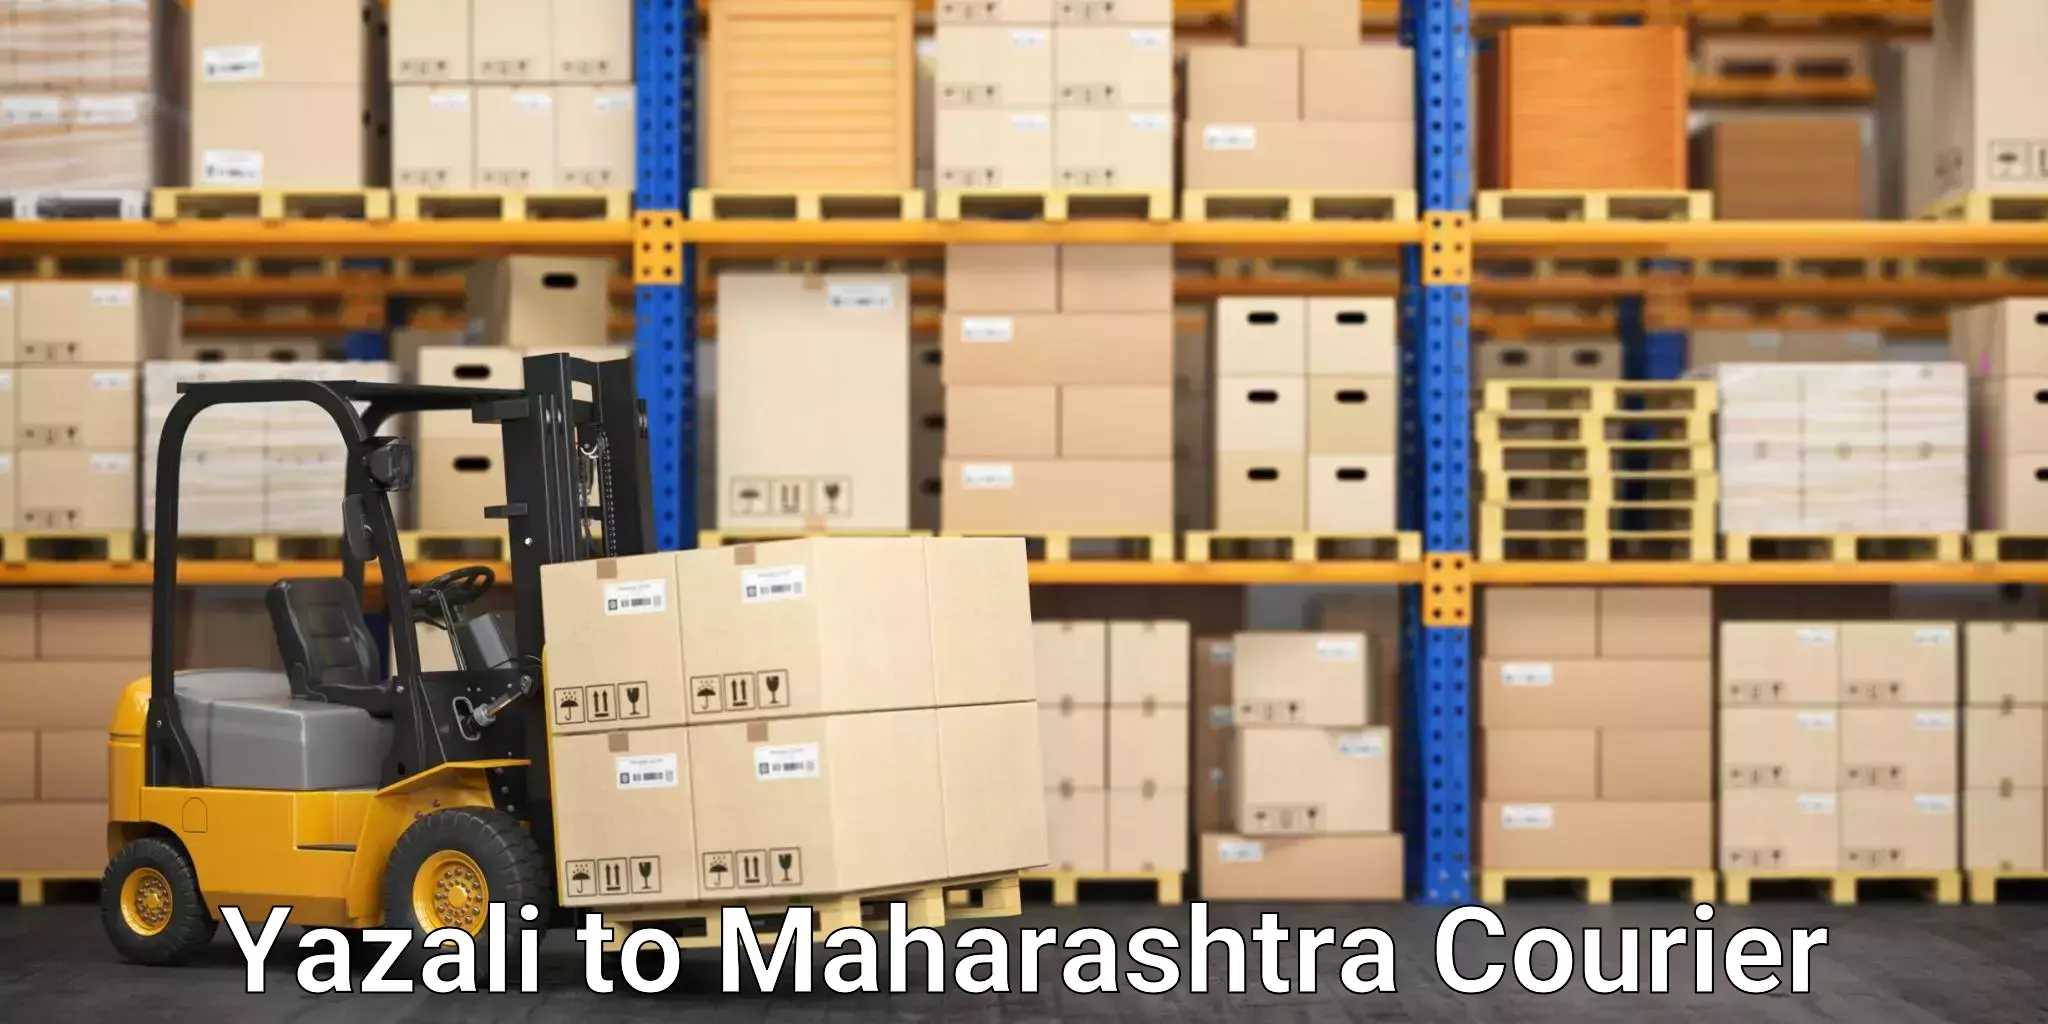 Parcel service for businesses Yazali to Maharashtra